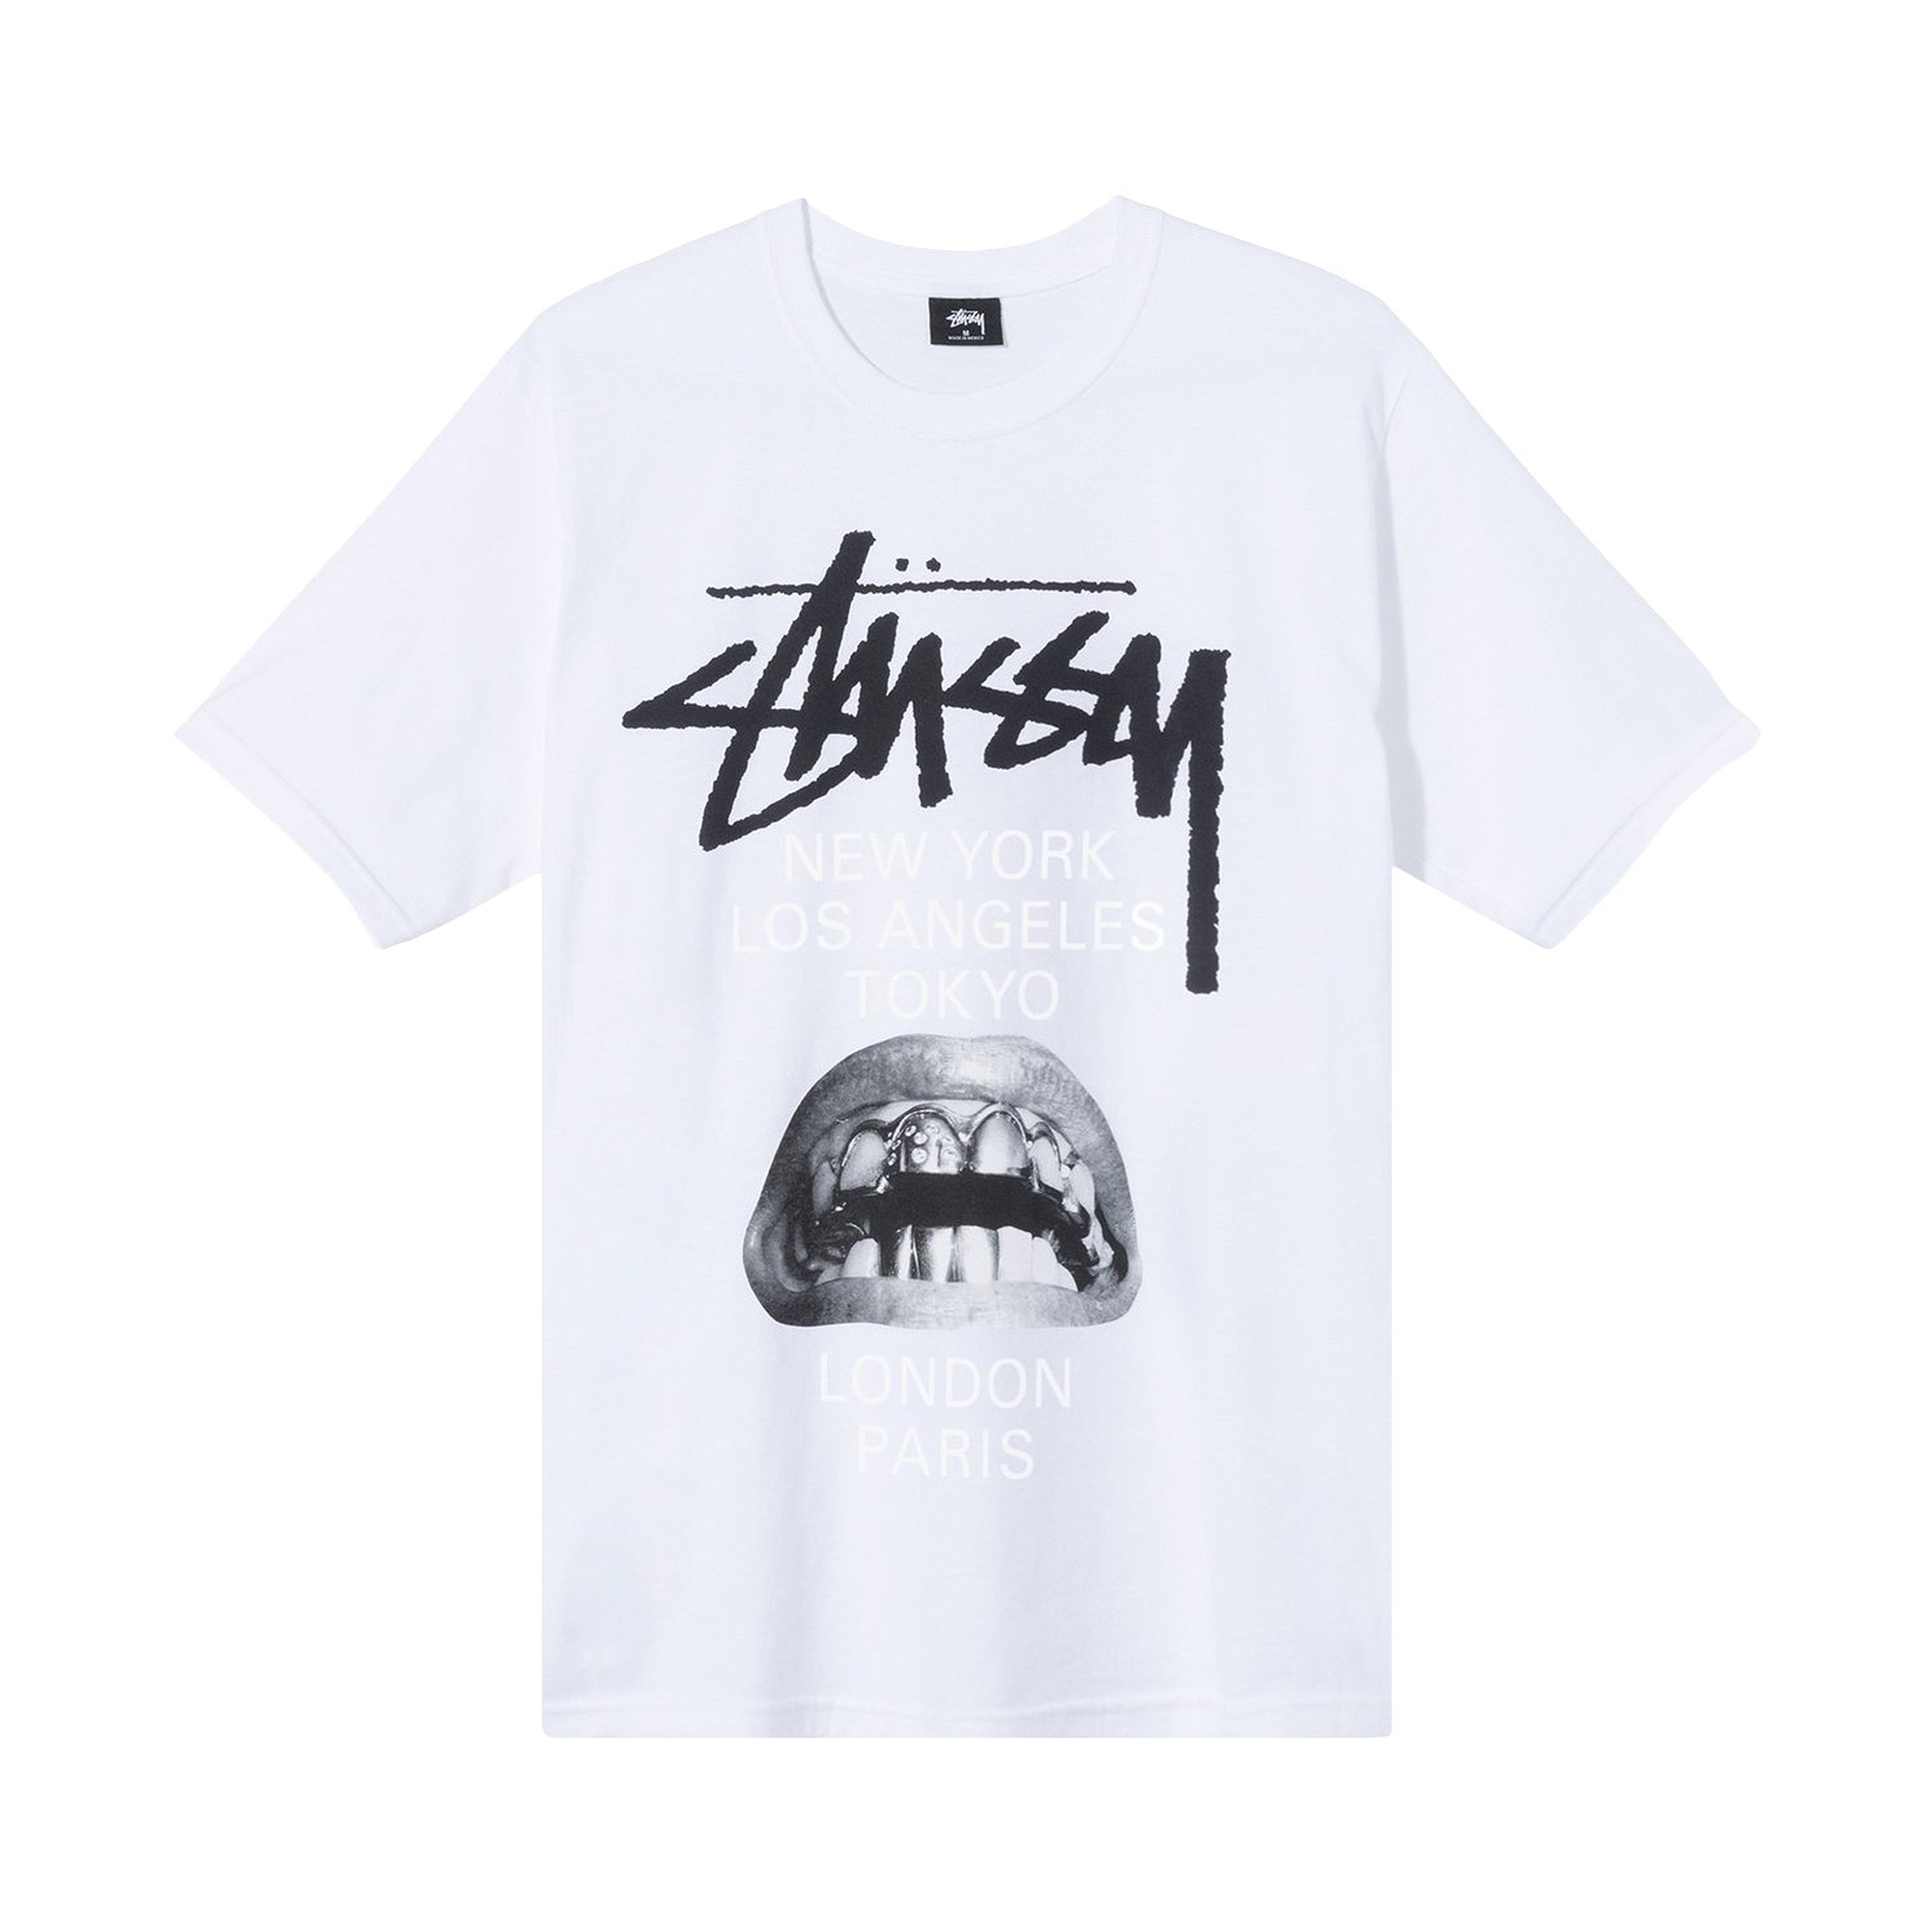 Stussy x Rick Owens World Tour Collection T-Shirt 'White'